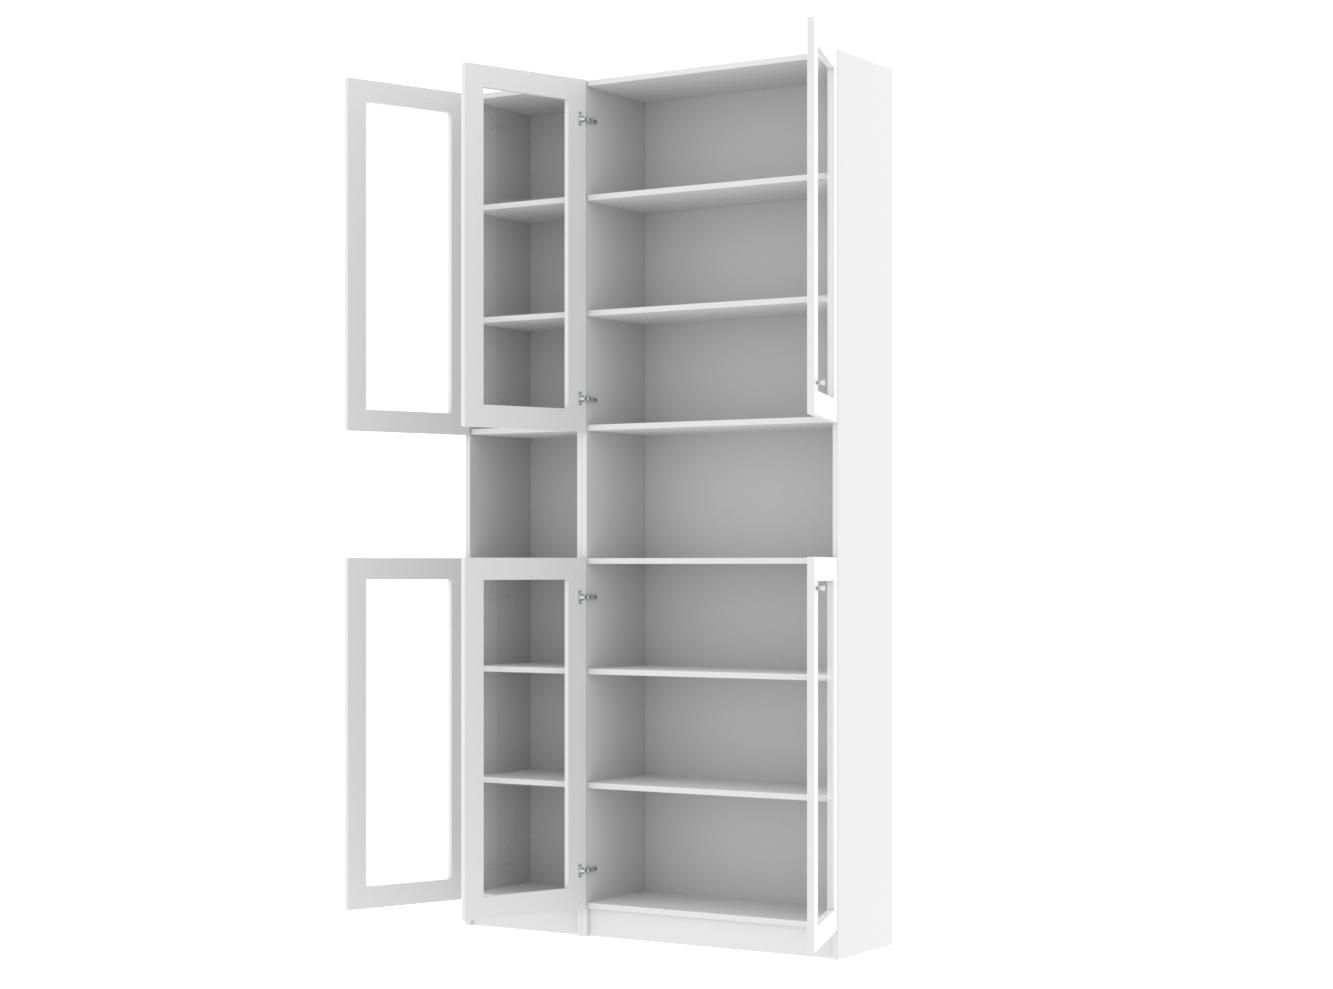  Книжный шкаф Билли 388 white ИКЕА (IKEA) изображение товара